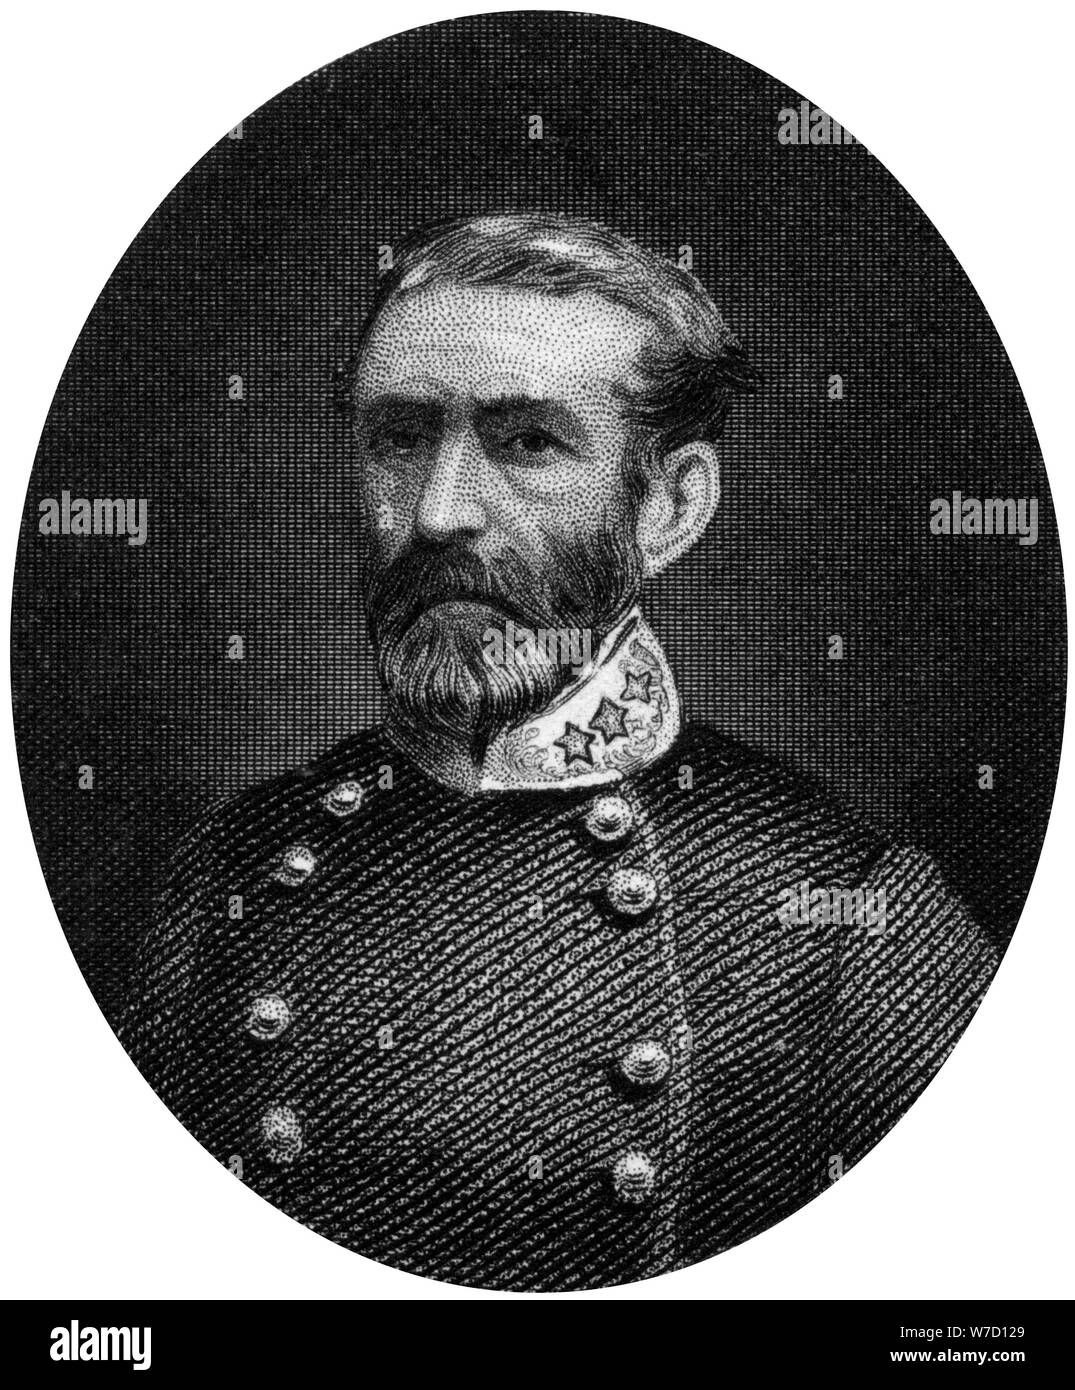 Braxton Bragg, Confederate general, 1862-1867.Artist: J Rogers Stock Photo